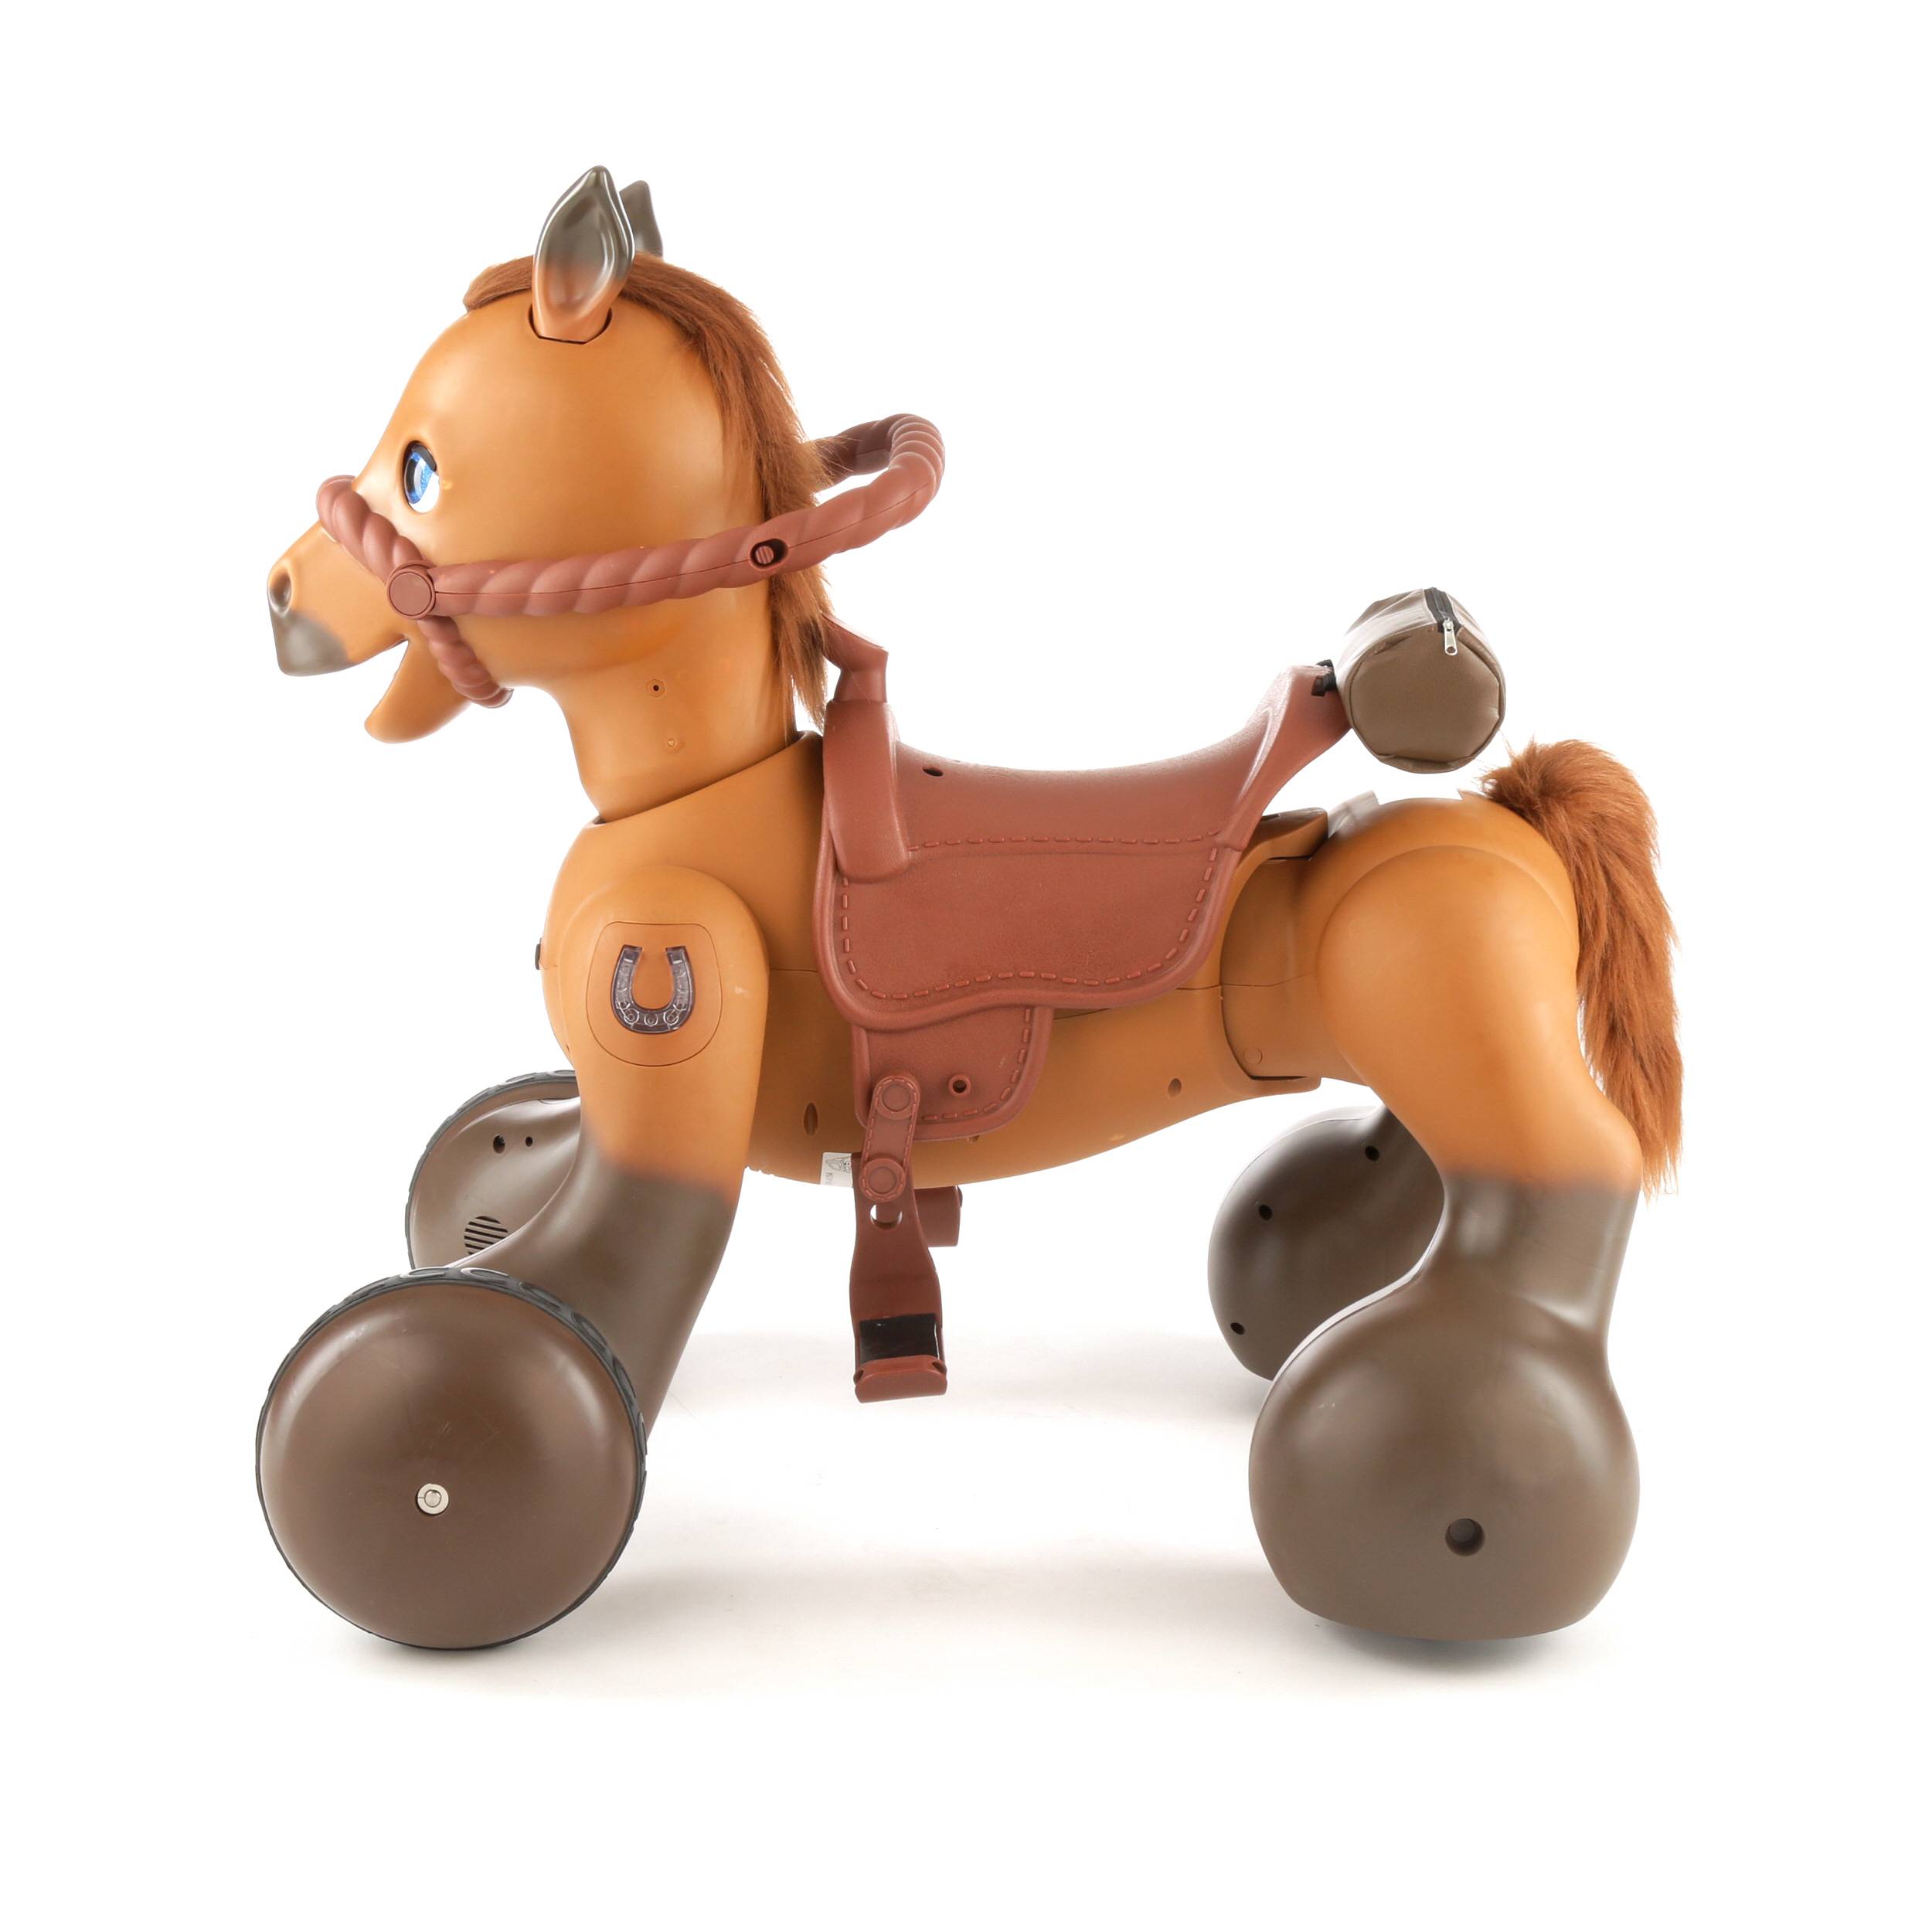 walmart toy riding horse